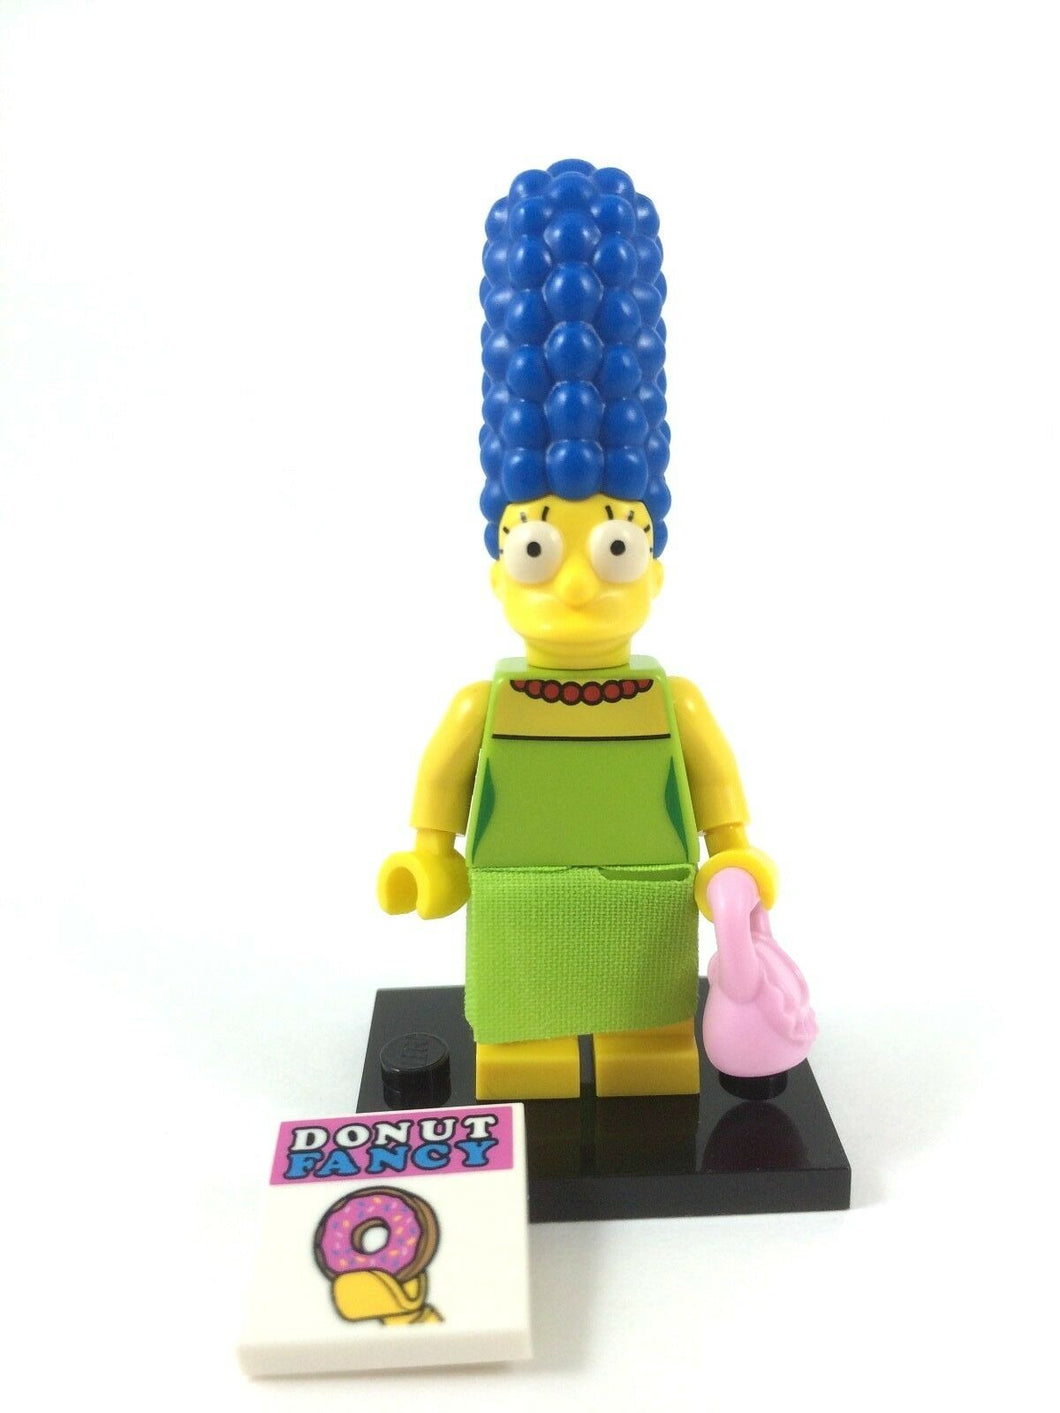 NEW LEGO 71005 MINIFIGURES SERIES S (Simpsons) - Marge Simpson